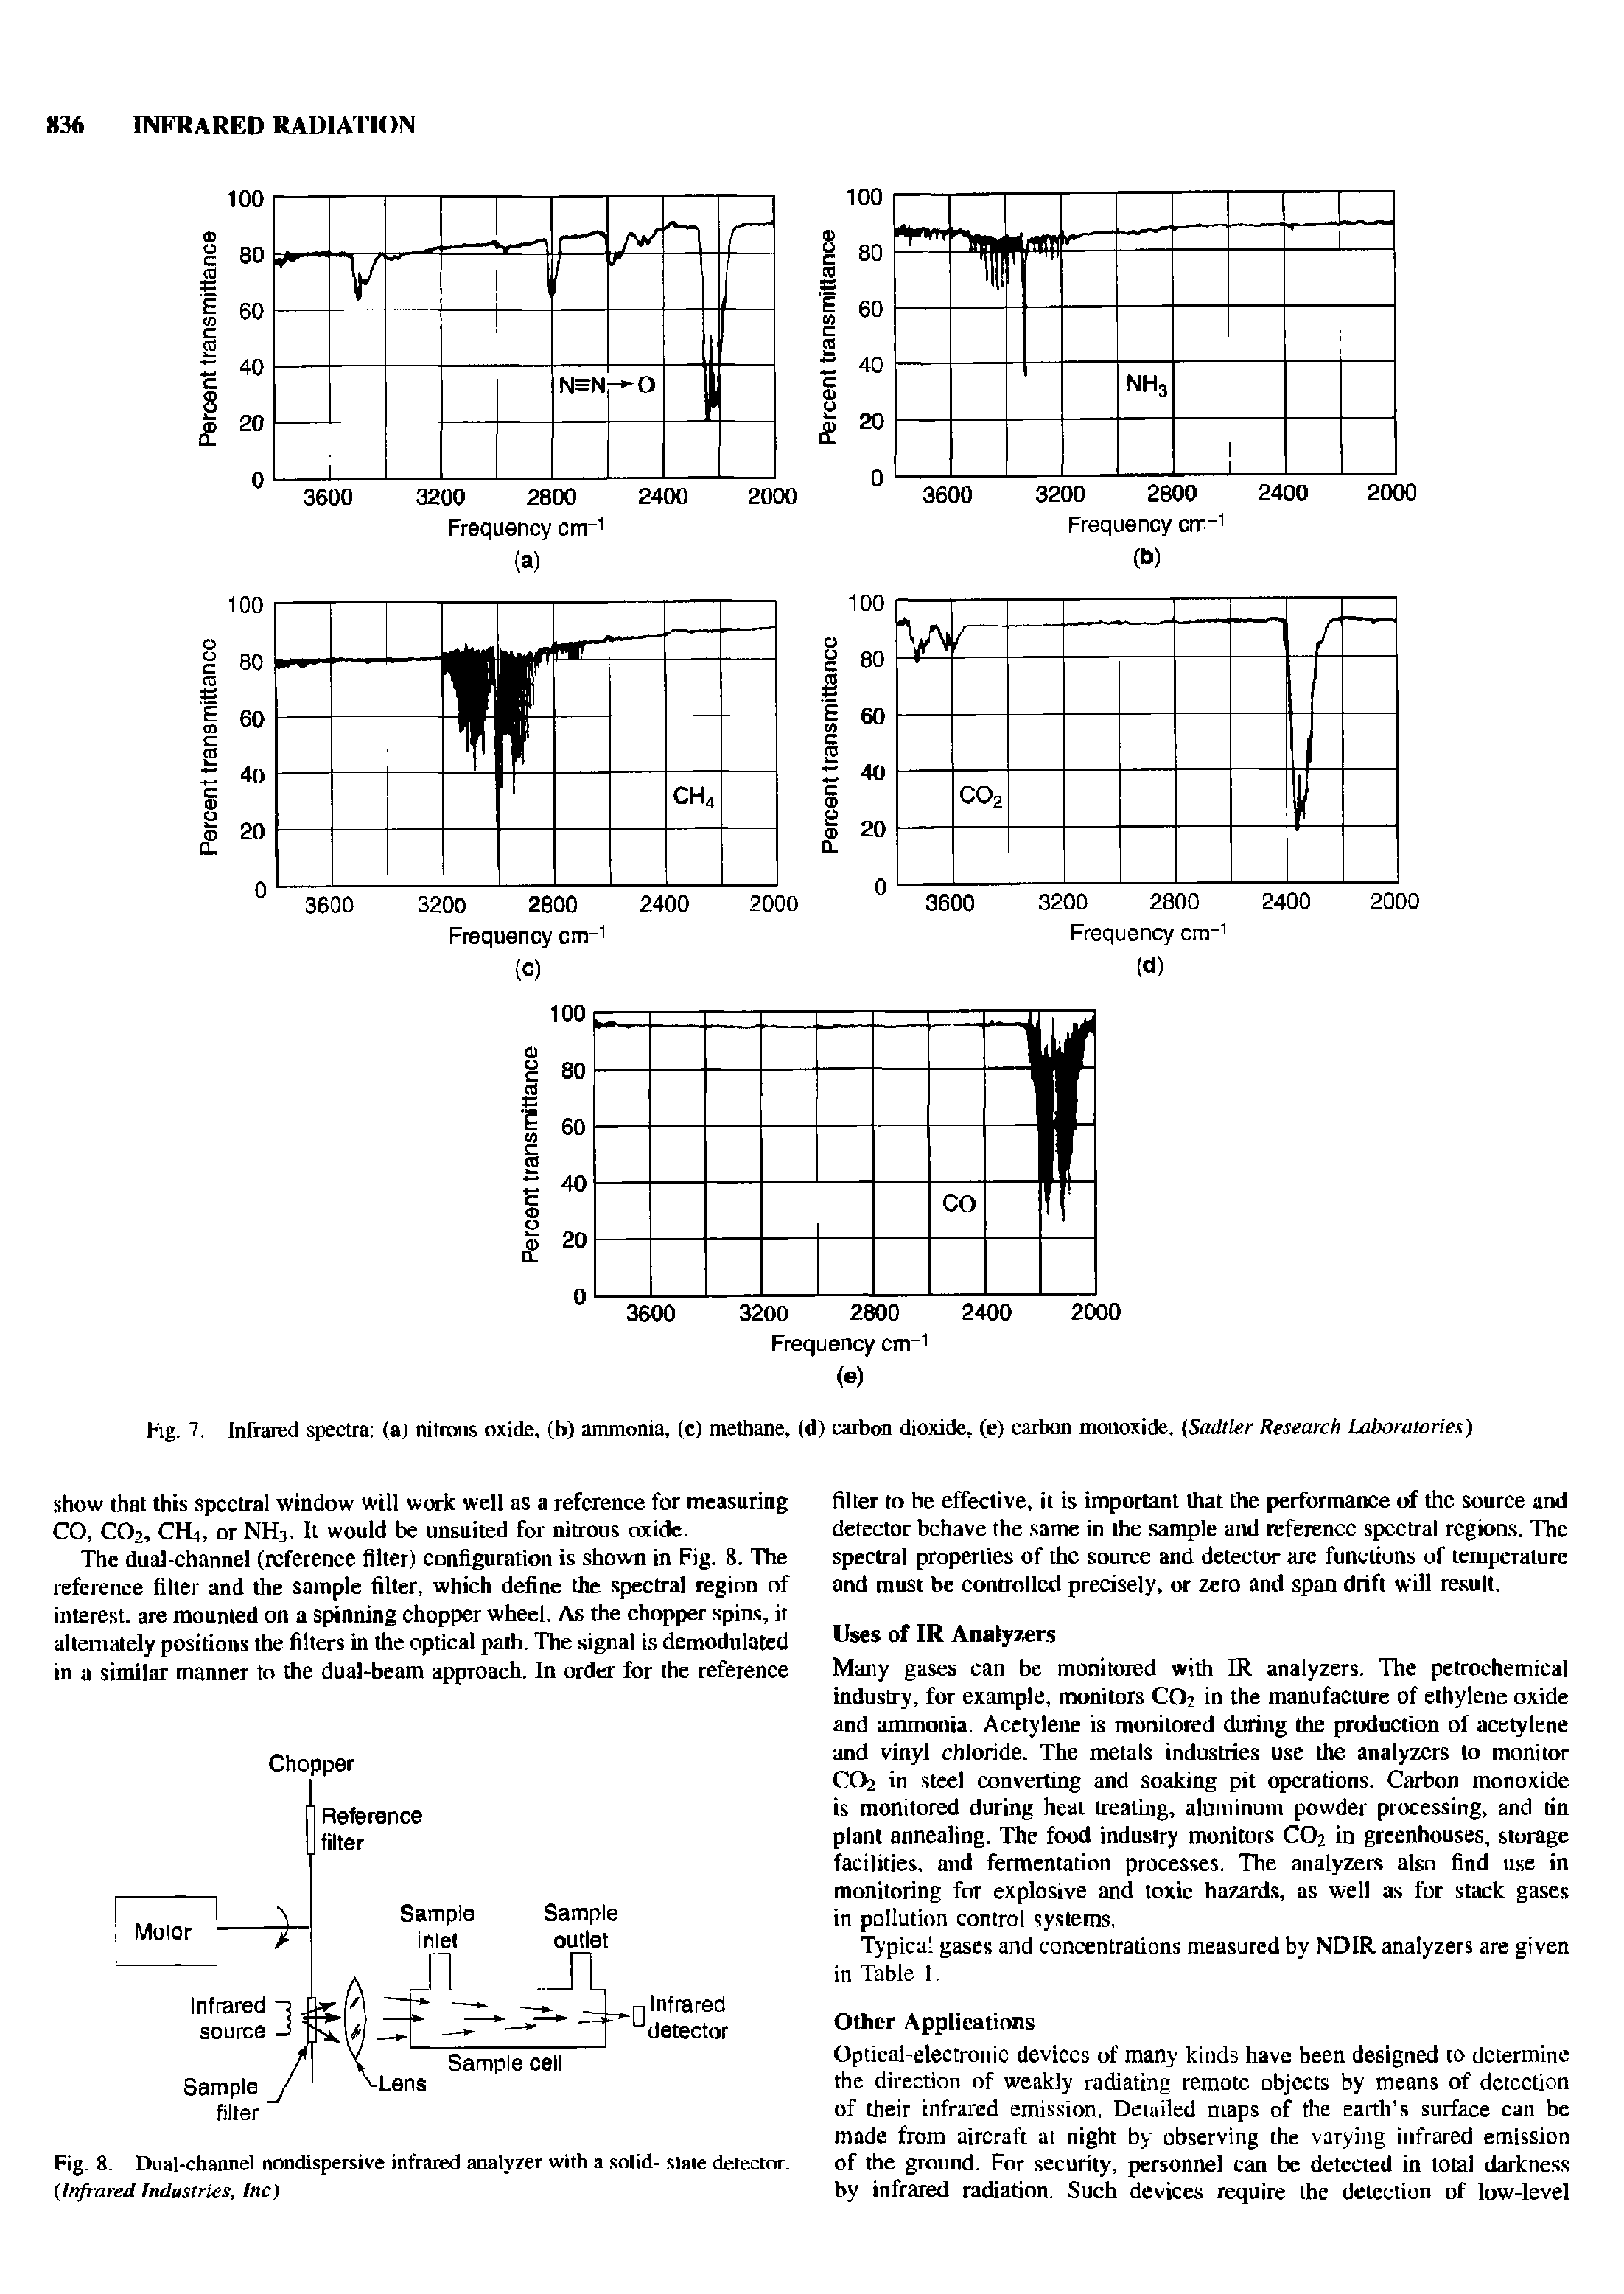 Fig. 7. Infrared specfra (a) nitrous oxide, (b) ammonia, (c) methane, (d) carbon dioxide, (e) carbon monoxide. (Sadtler Research Laboratories)...